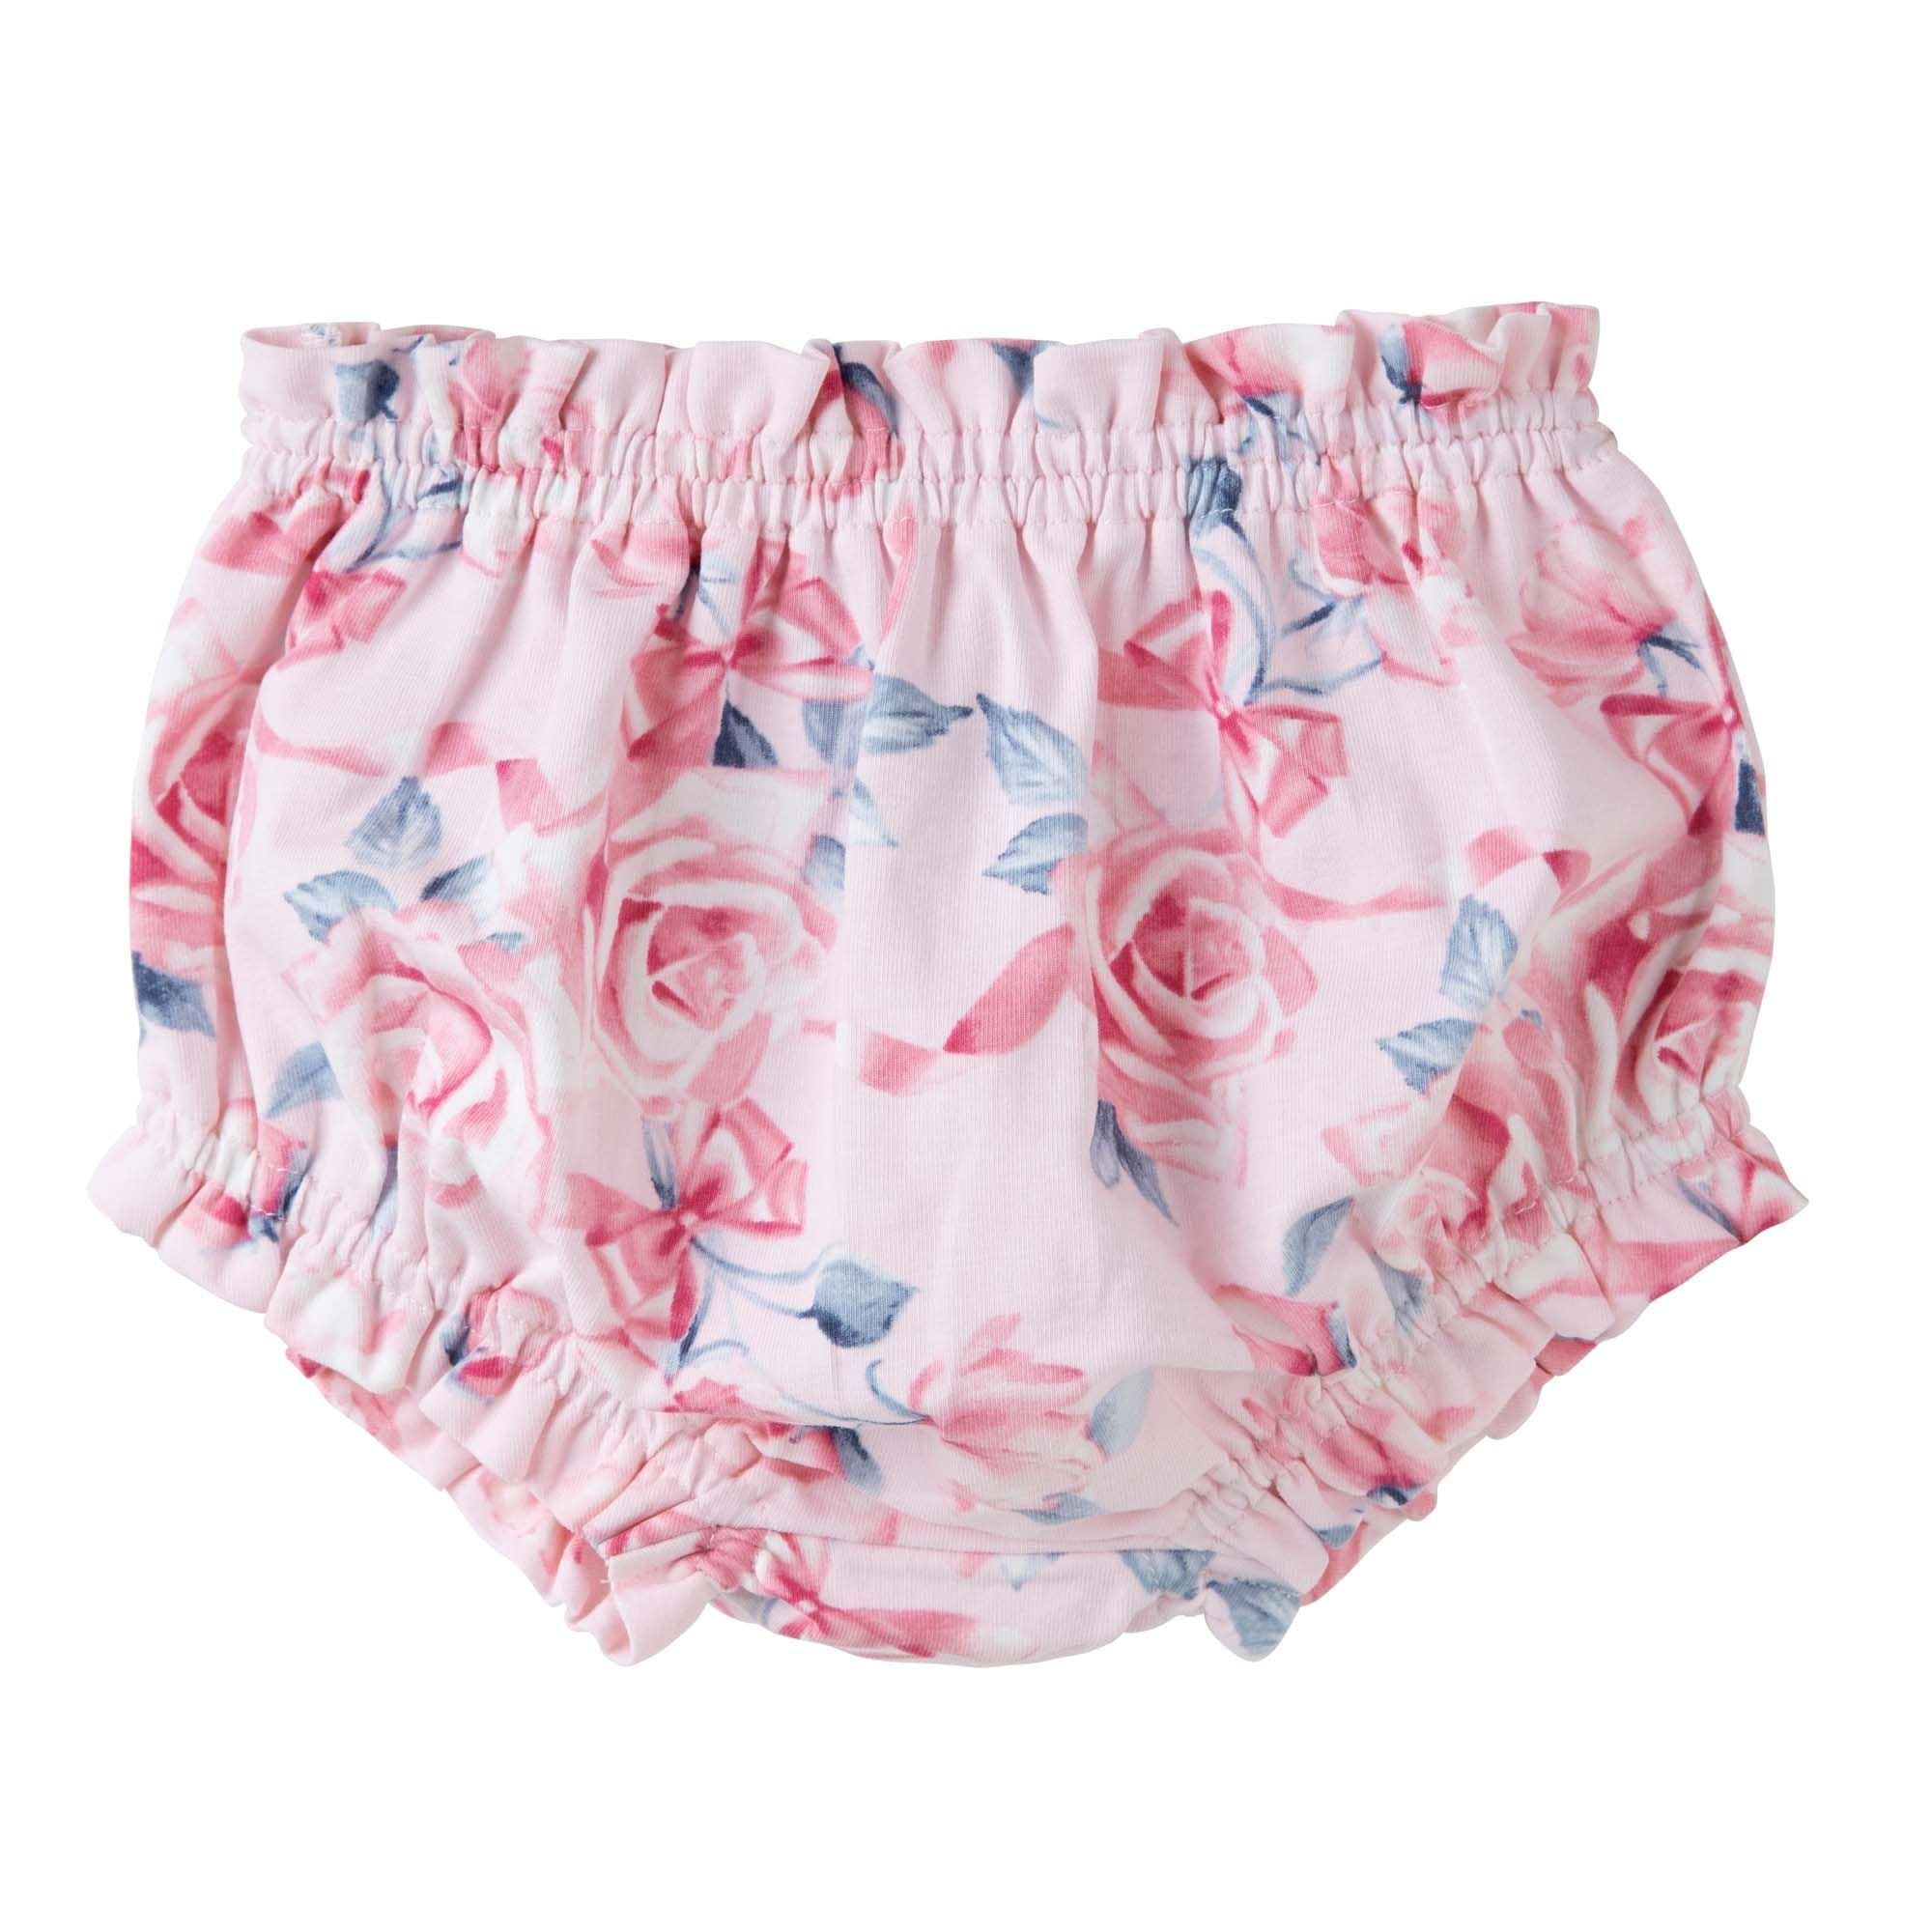 Designer Kidz Girls Bottoms Rose Bow Frilly Baby Bloomers - Pink